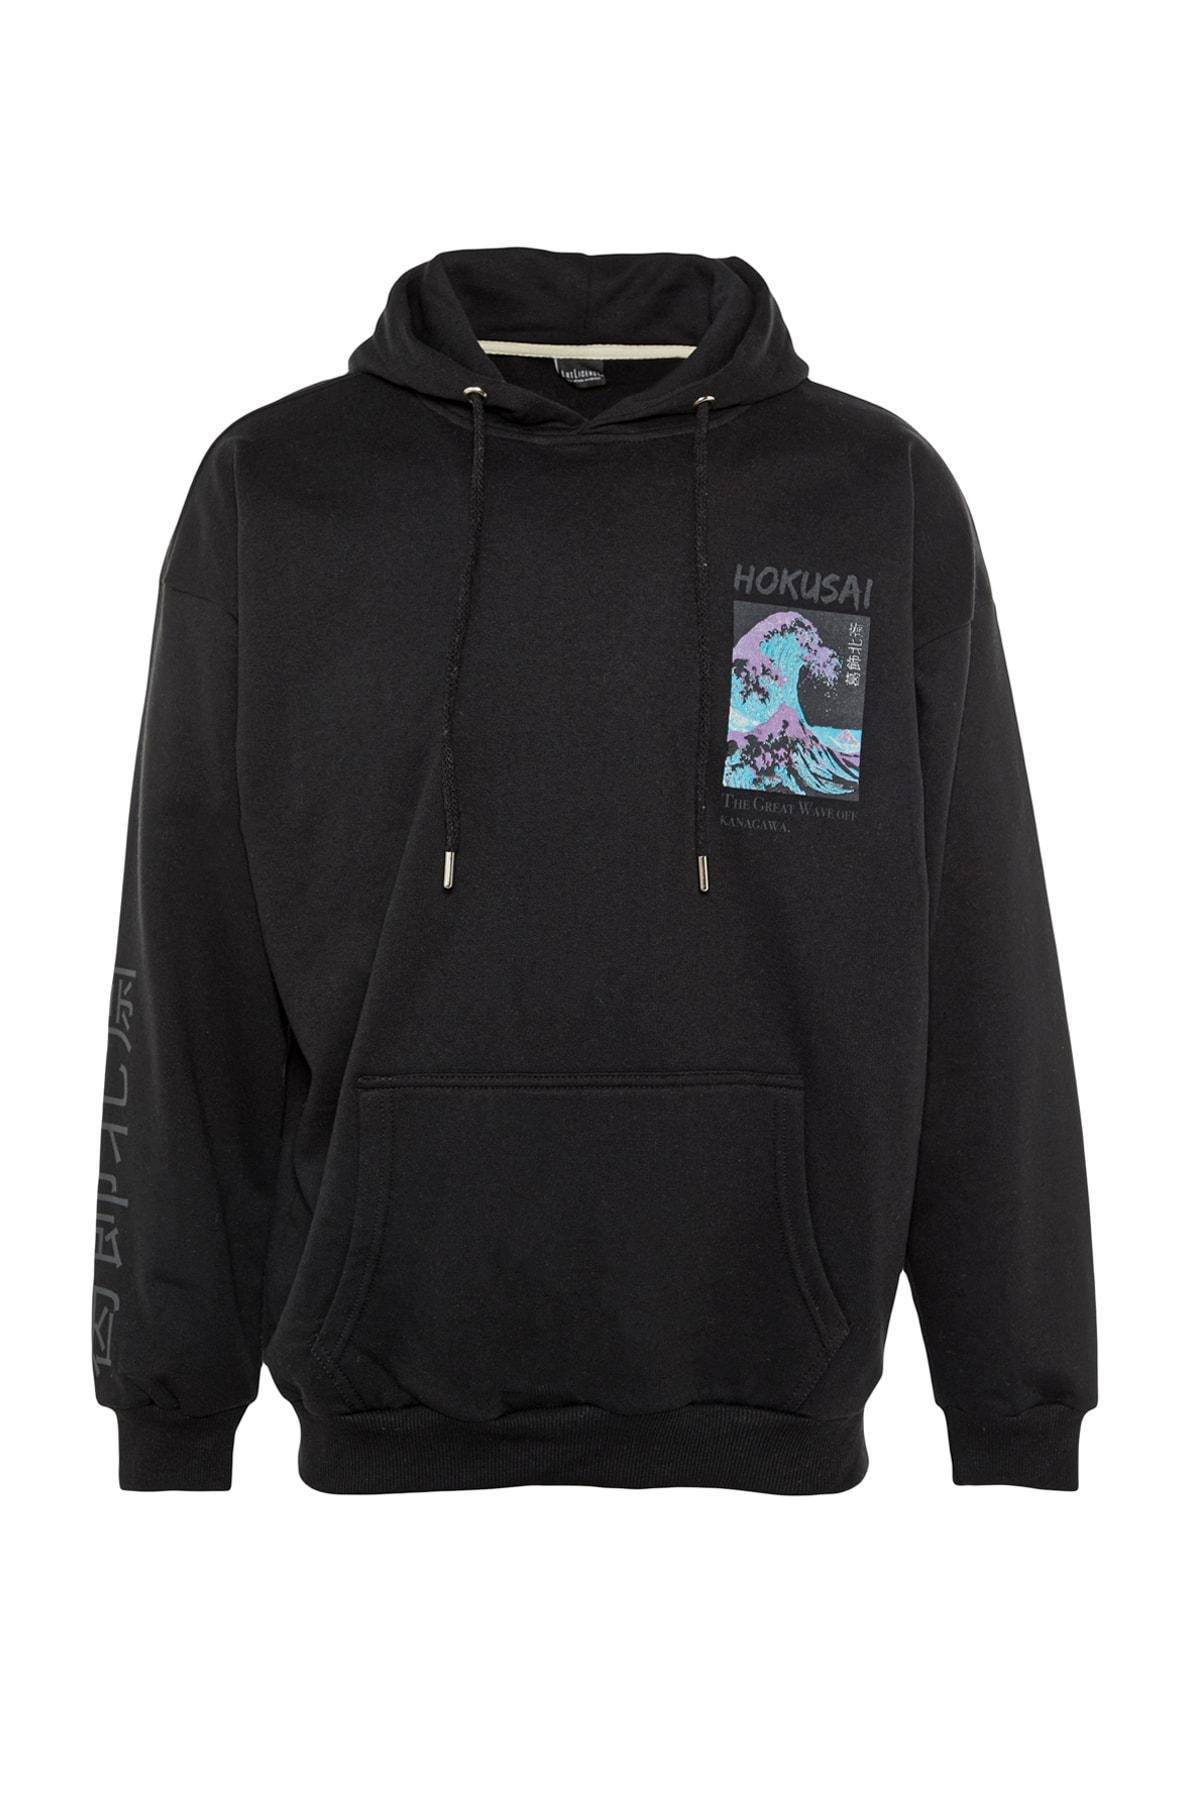 Trendyol - Black Oversize Hooded Sweatshirt